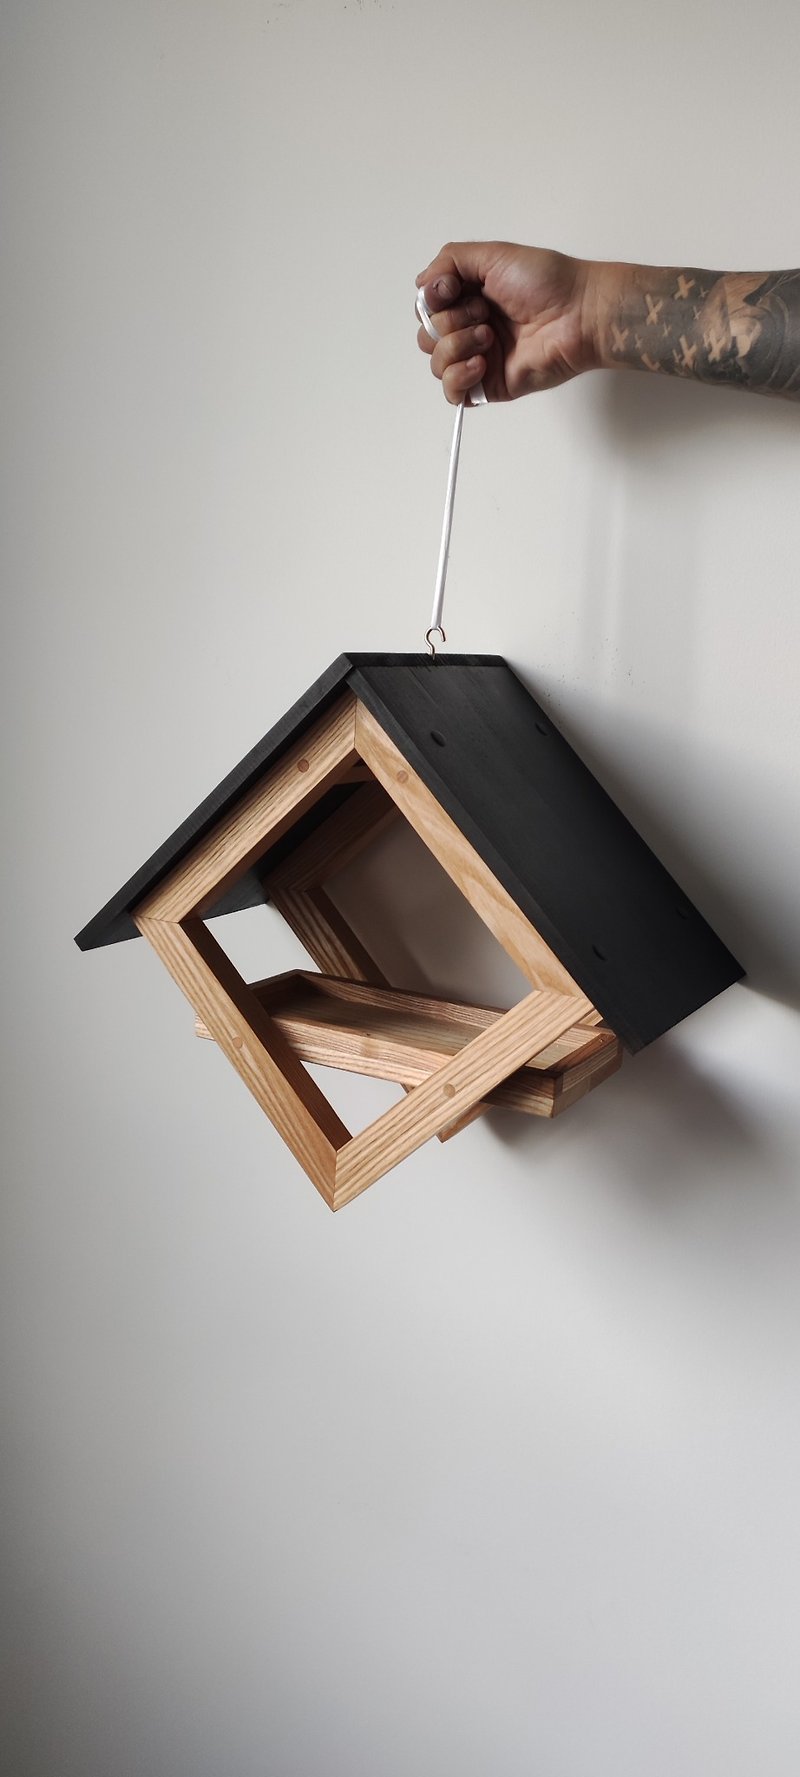 Wooden hanging bird feeder - Other - Wood Brown